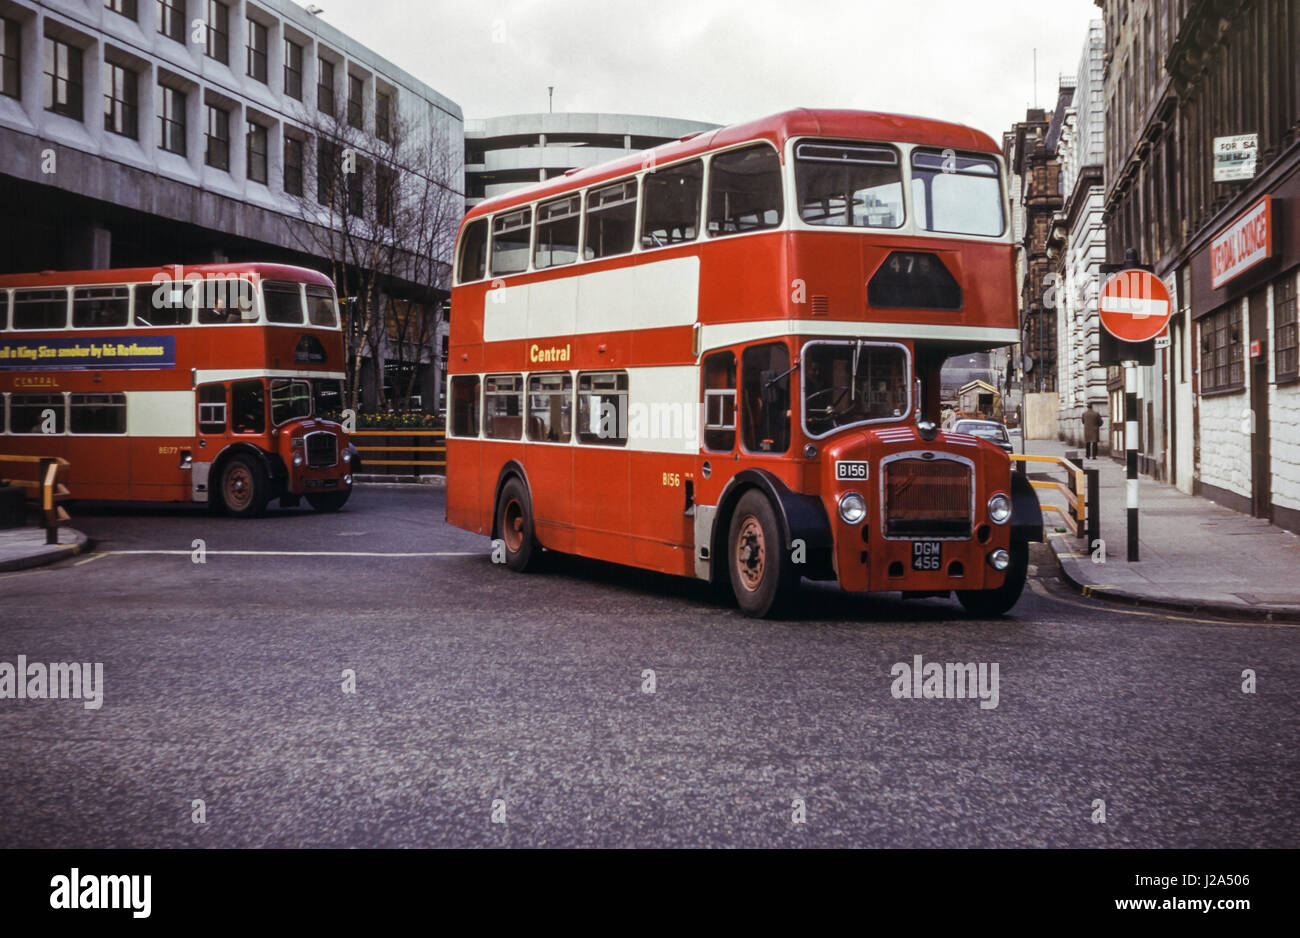 Glasgow, UK - 1973: Vintage image of bus on Glasgow streets in 1973. Central SMT Bristol Lodekka FSF ECW B156 (registration number DGM456). Stock Photo